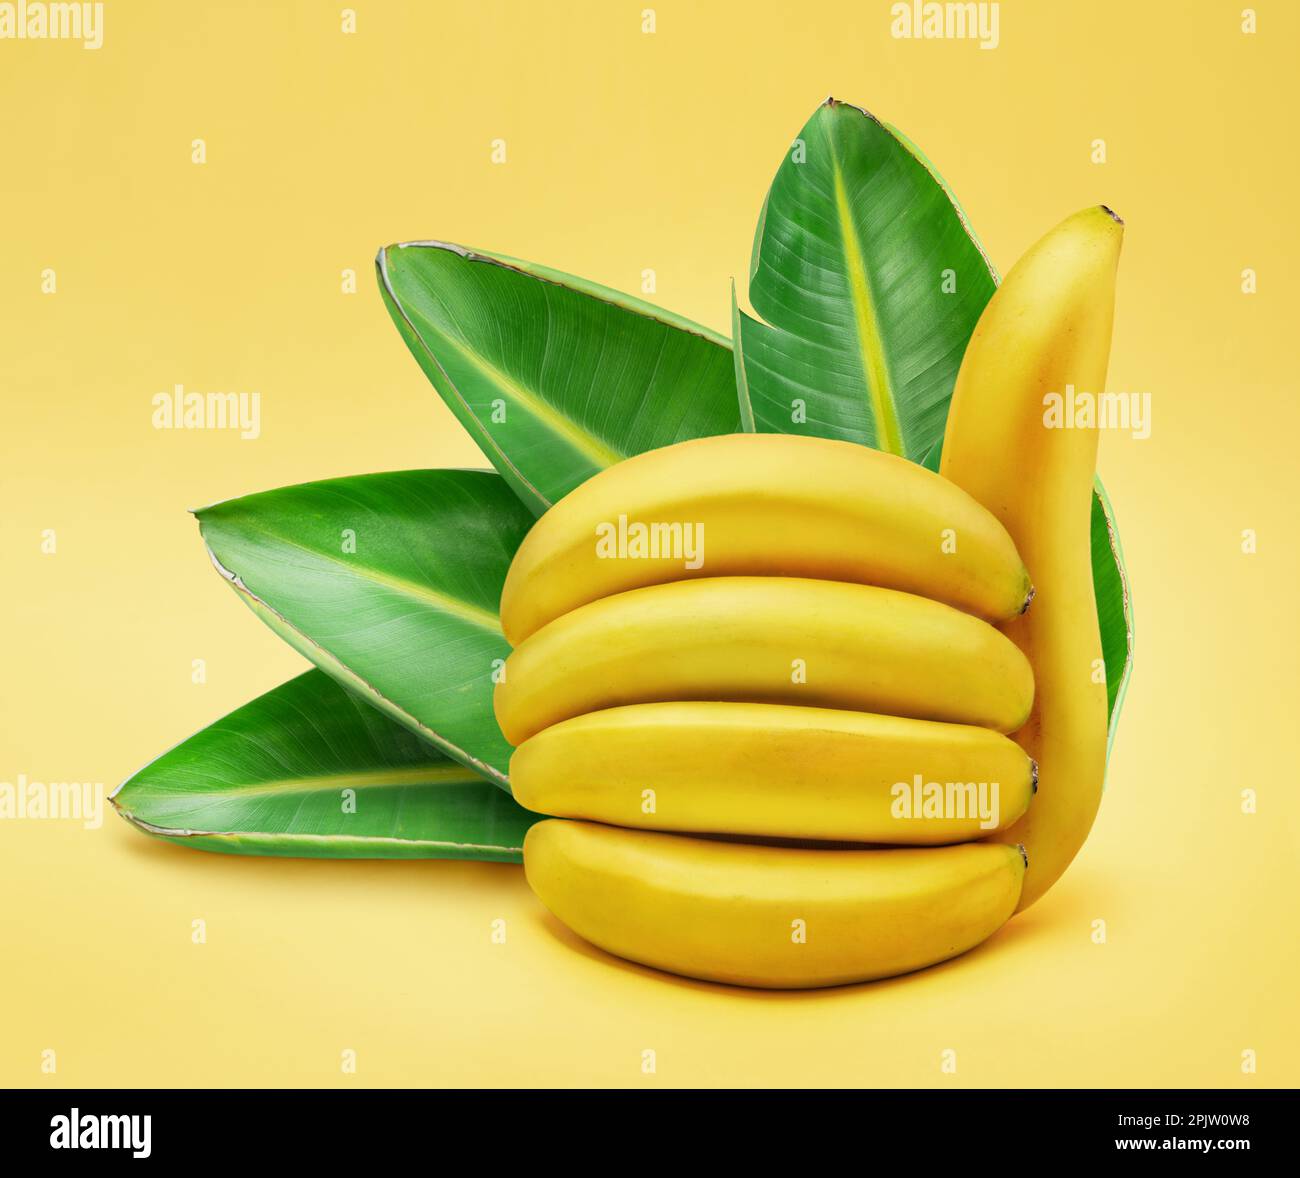 Banana thumb-up sign, green banana leaves on yellow background. Stock Photo